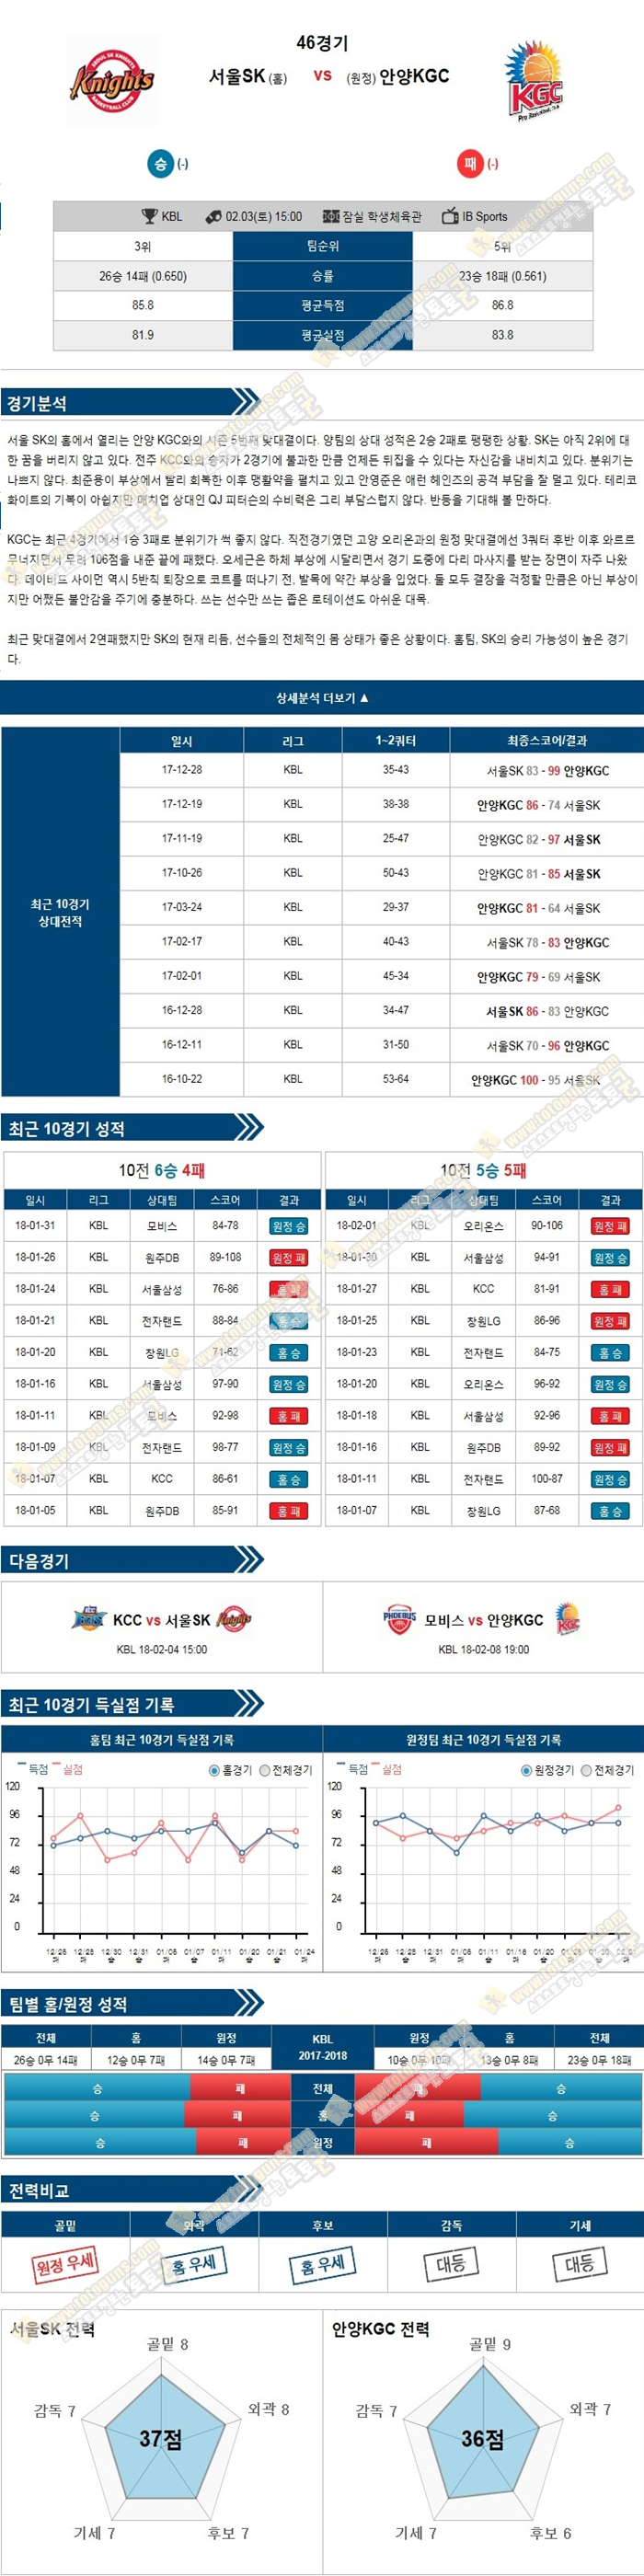 [KBL] 2월 3일 15:00 프로농구분석 서울SK vs 안양KGC